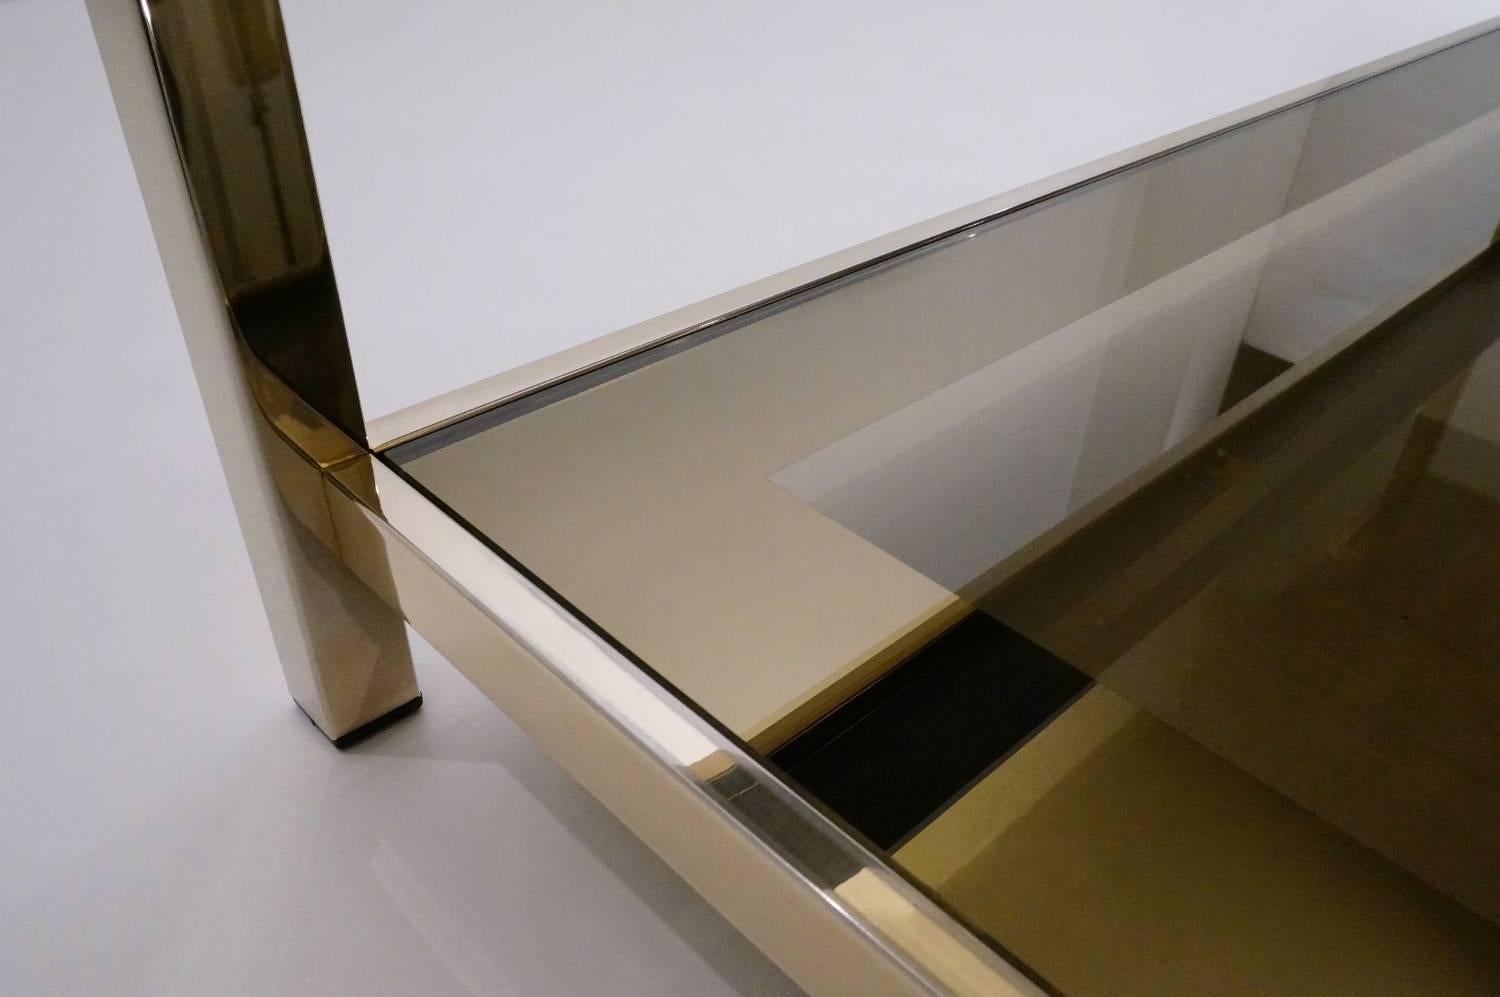 Late 20th Century Gold-Plated Coffee Table with Shelf, 23-Karat Belgo Chrome, circa 1980s, Belgian